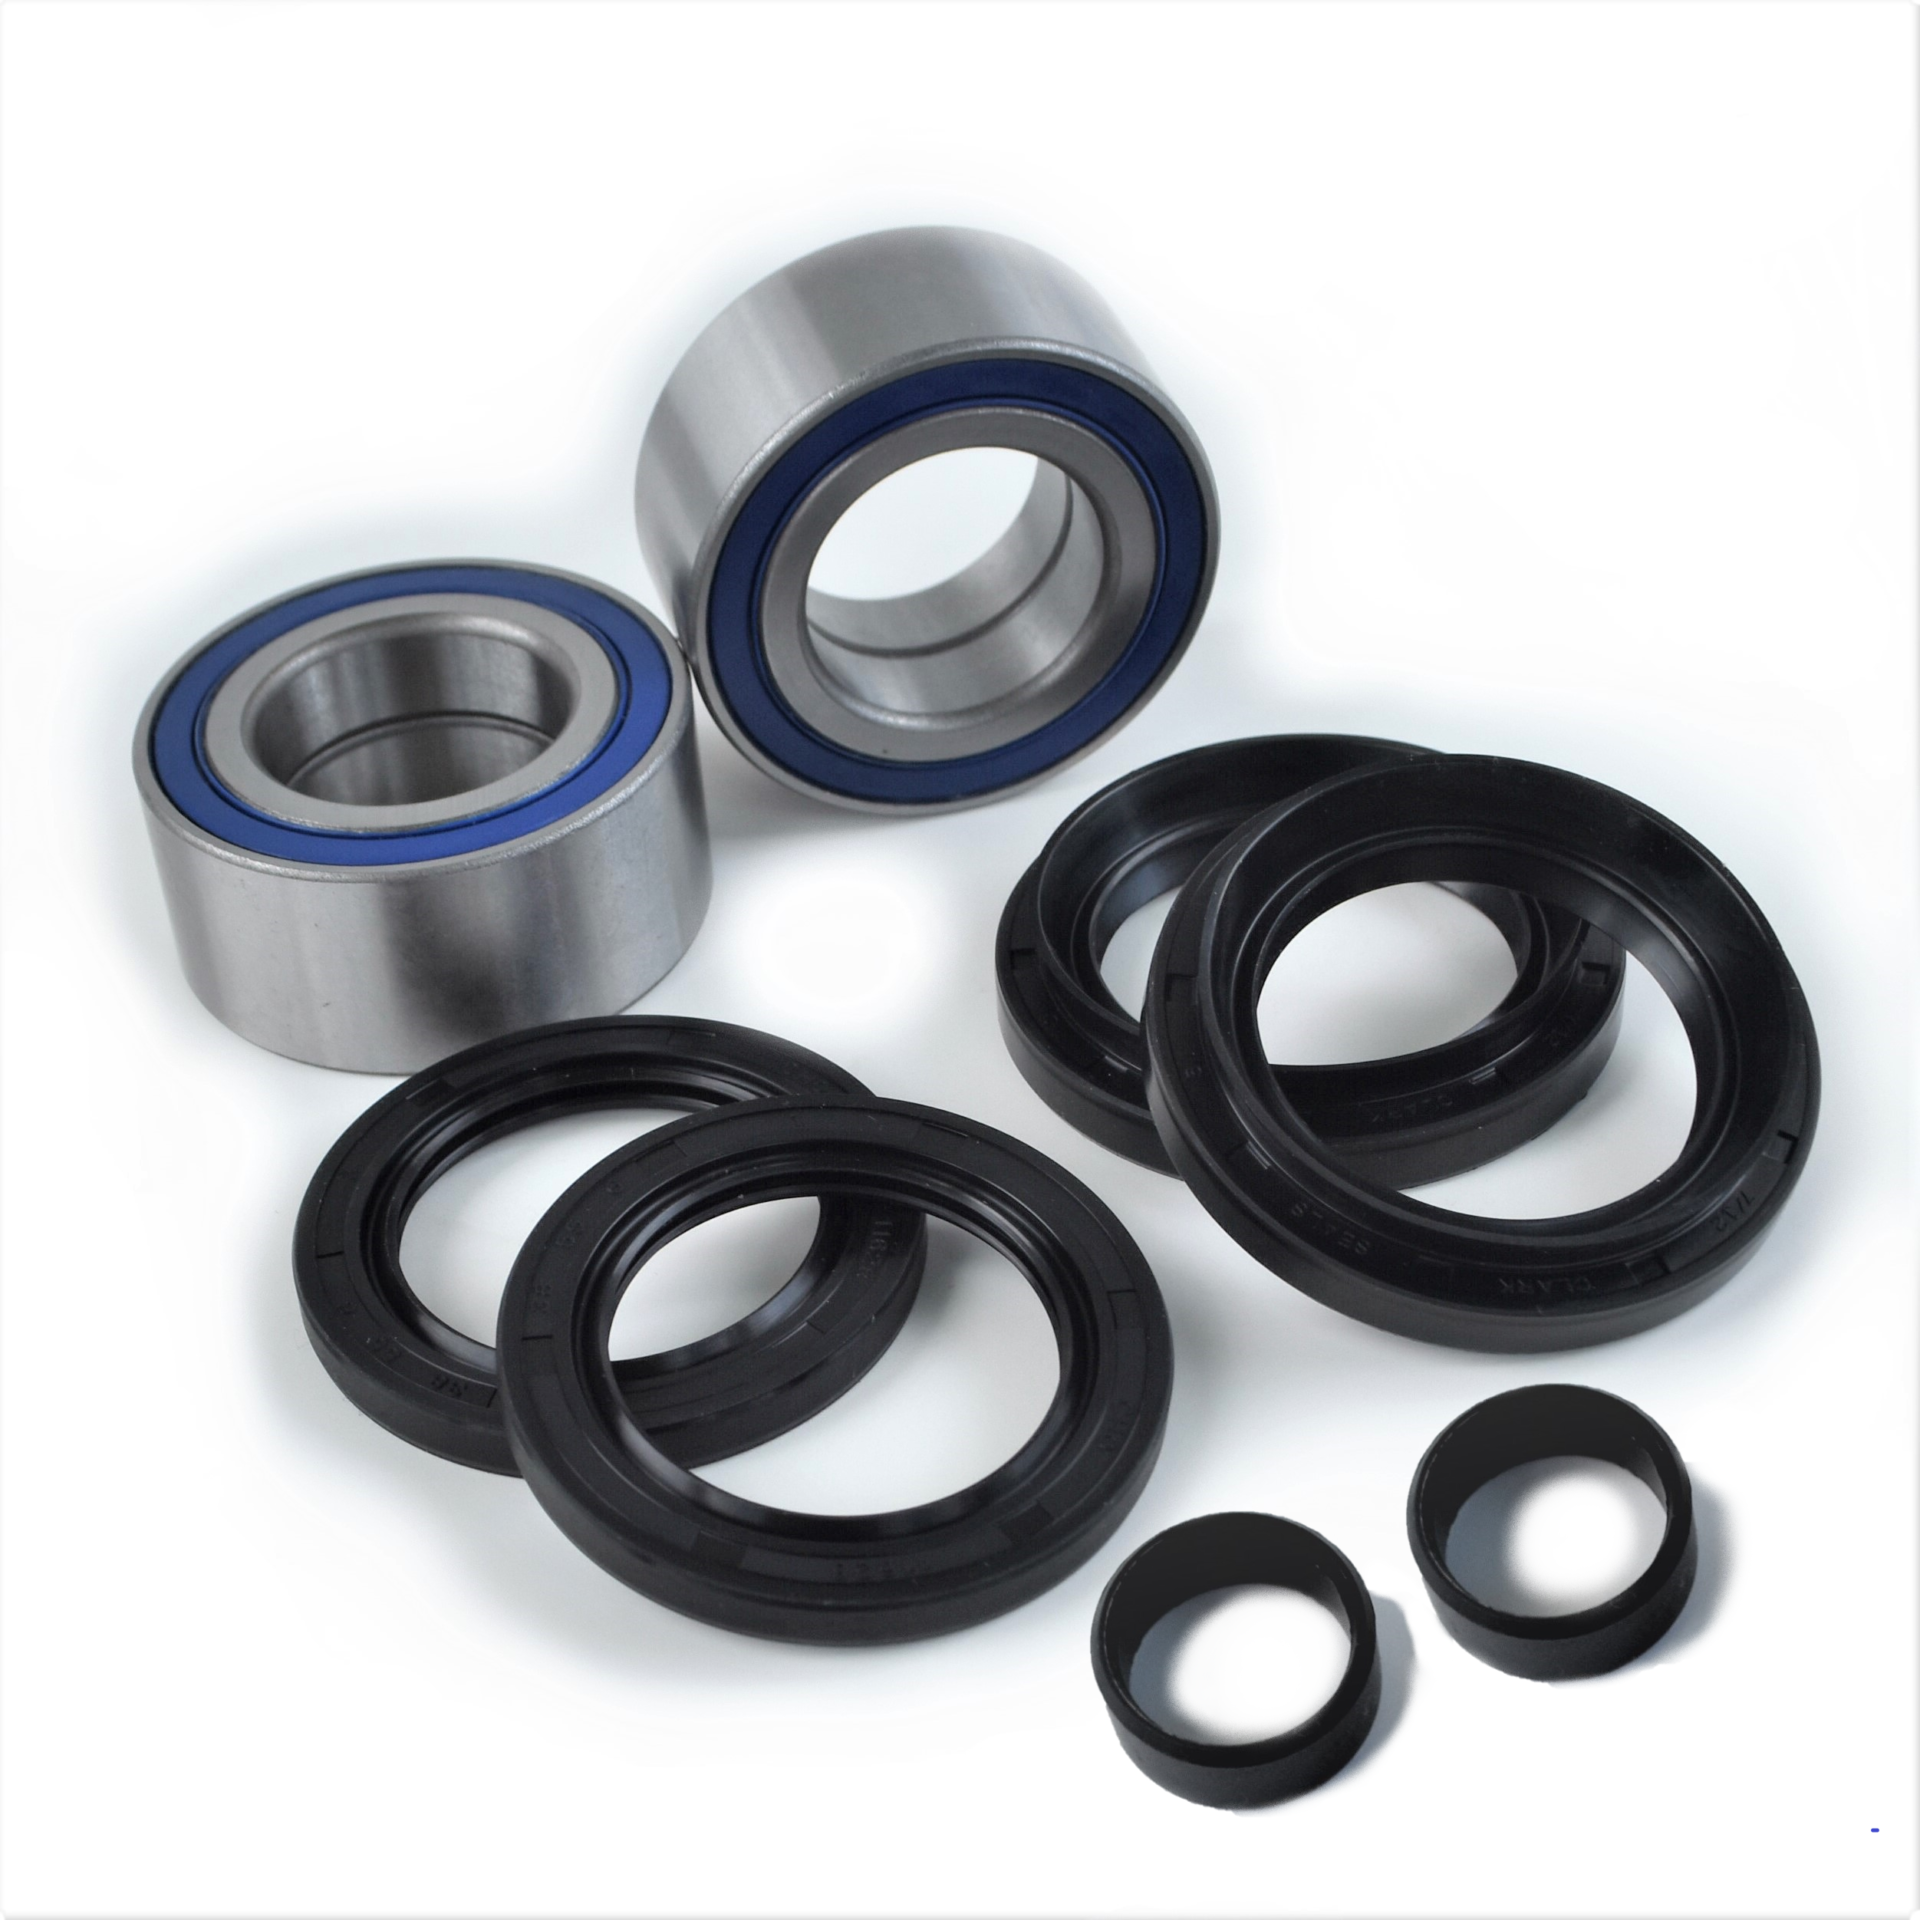 Honda Fourtrax bearings and seals